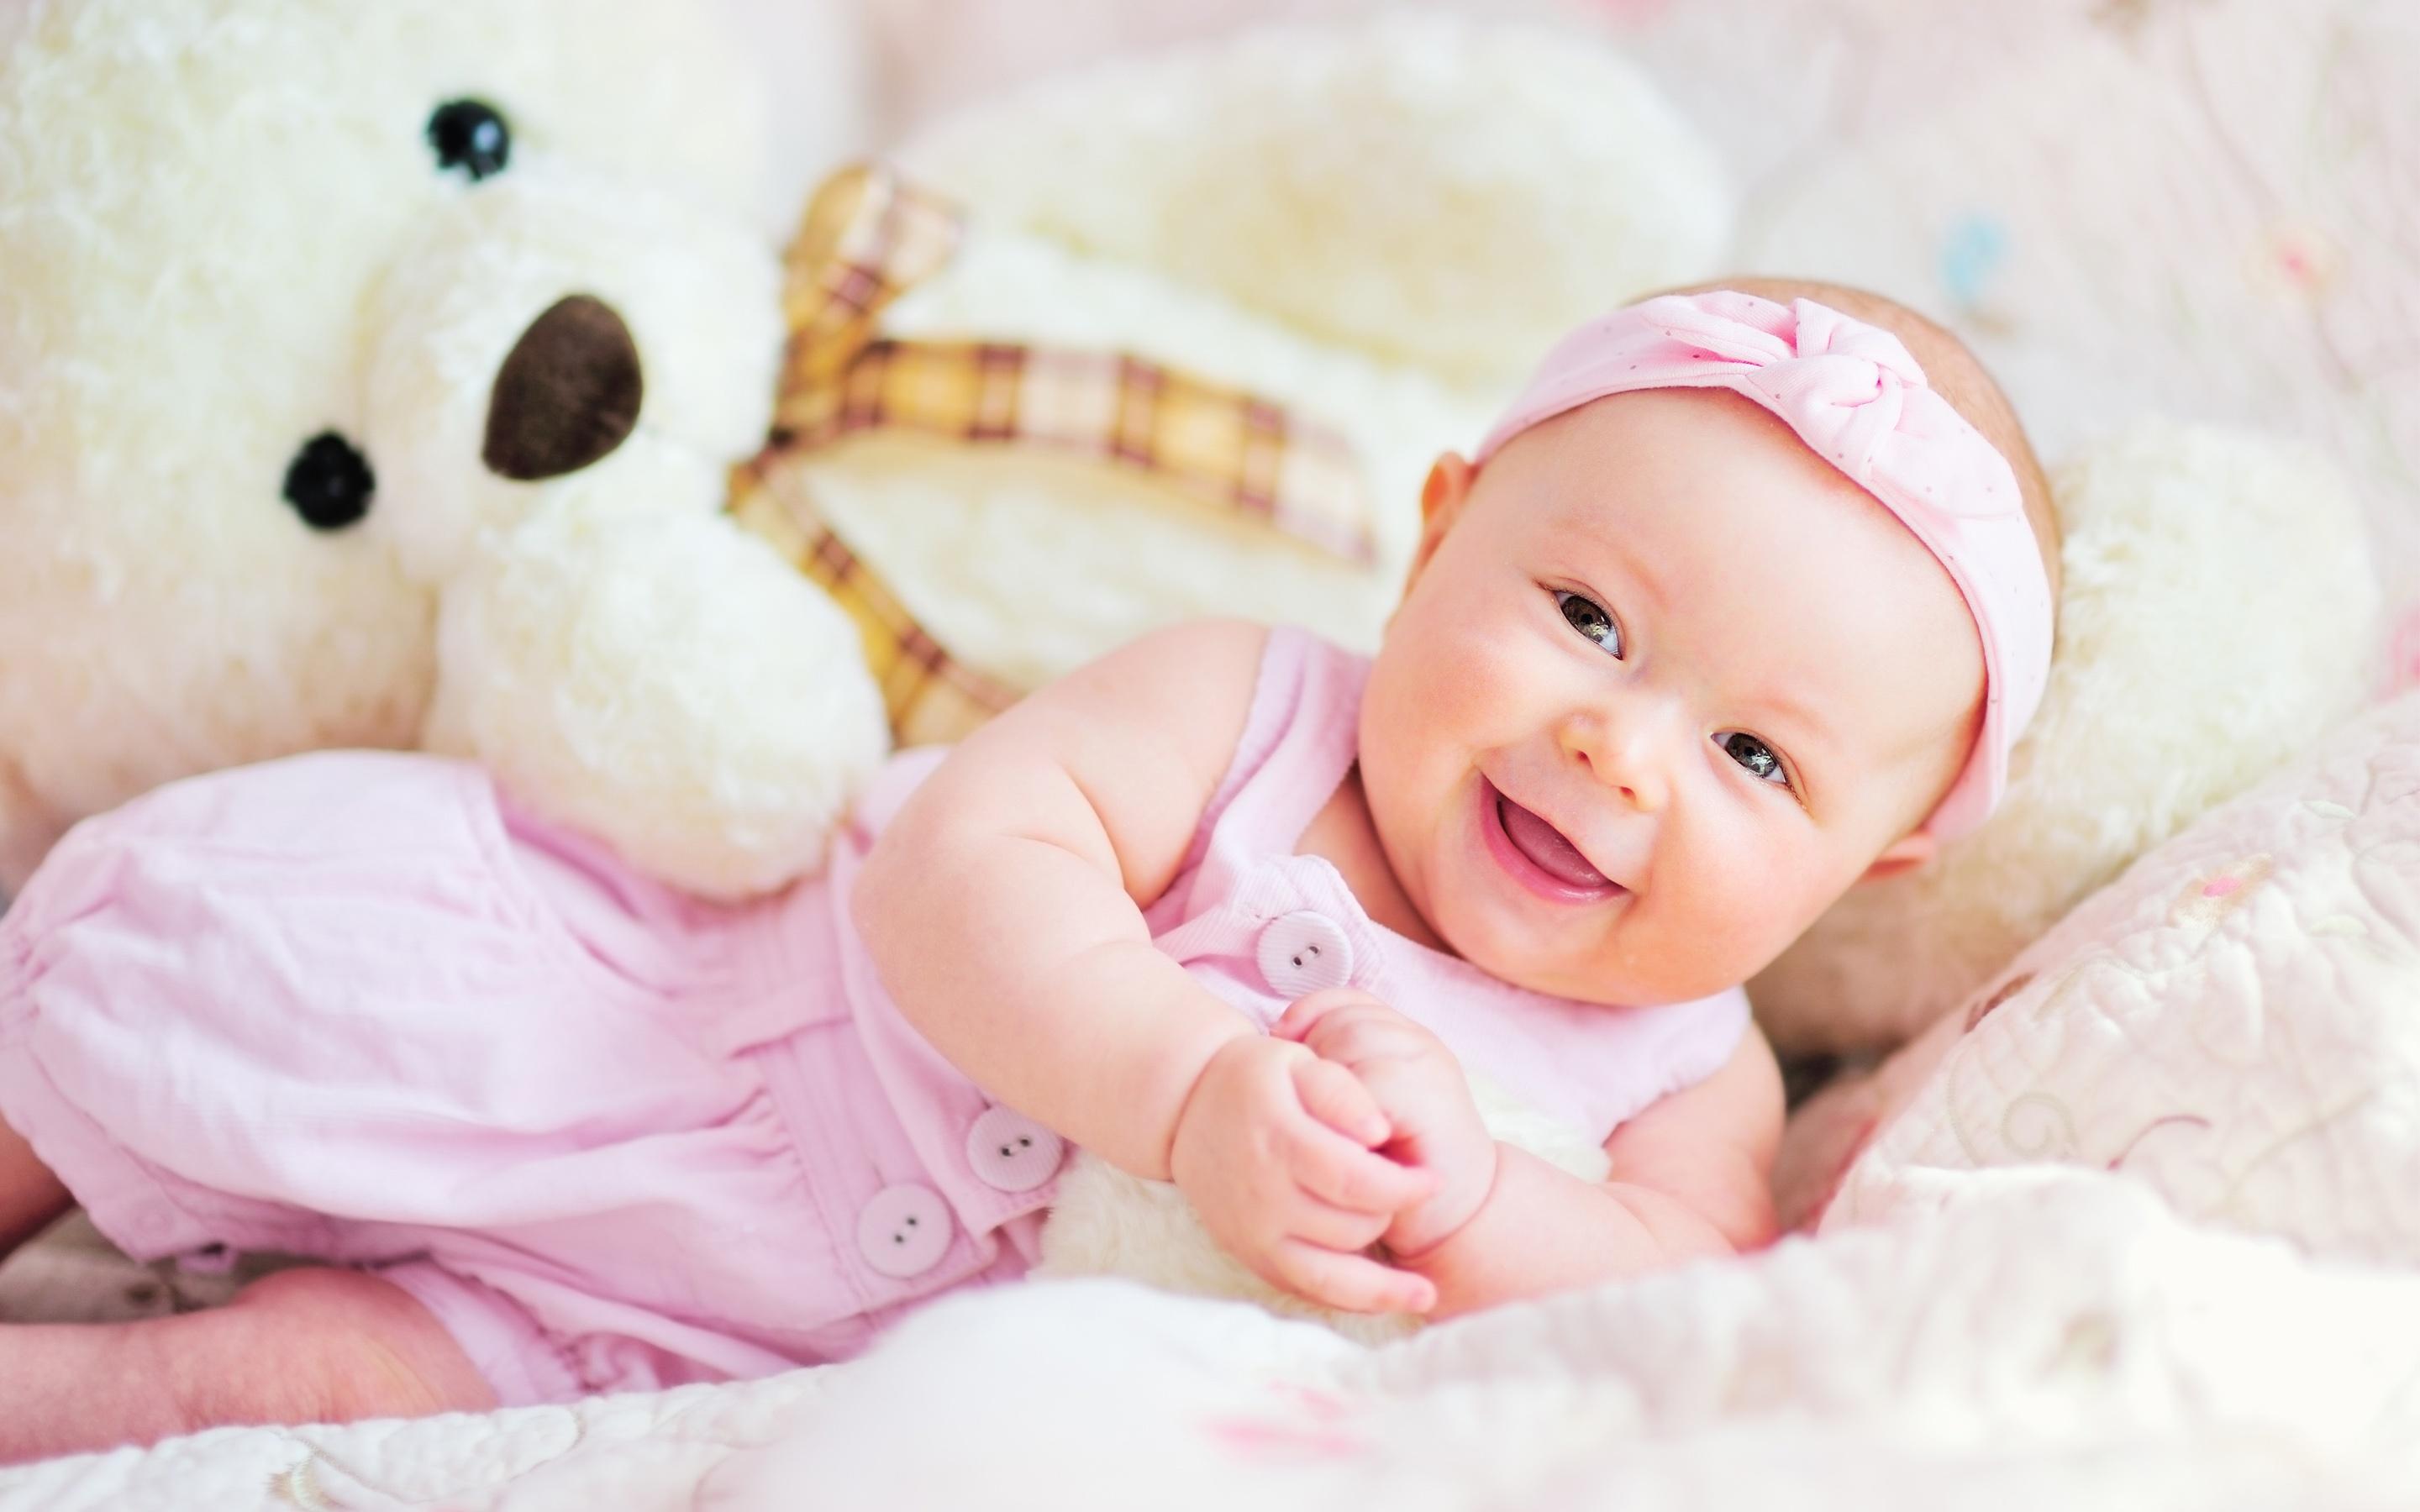 Cute Baby Teddy Bear Wallpaper in jpg format for free download